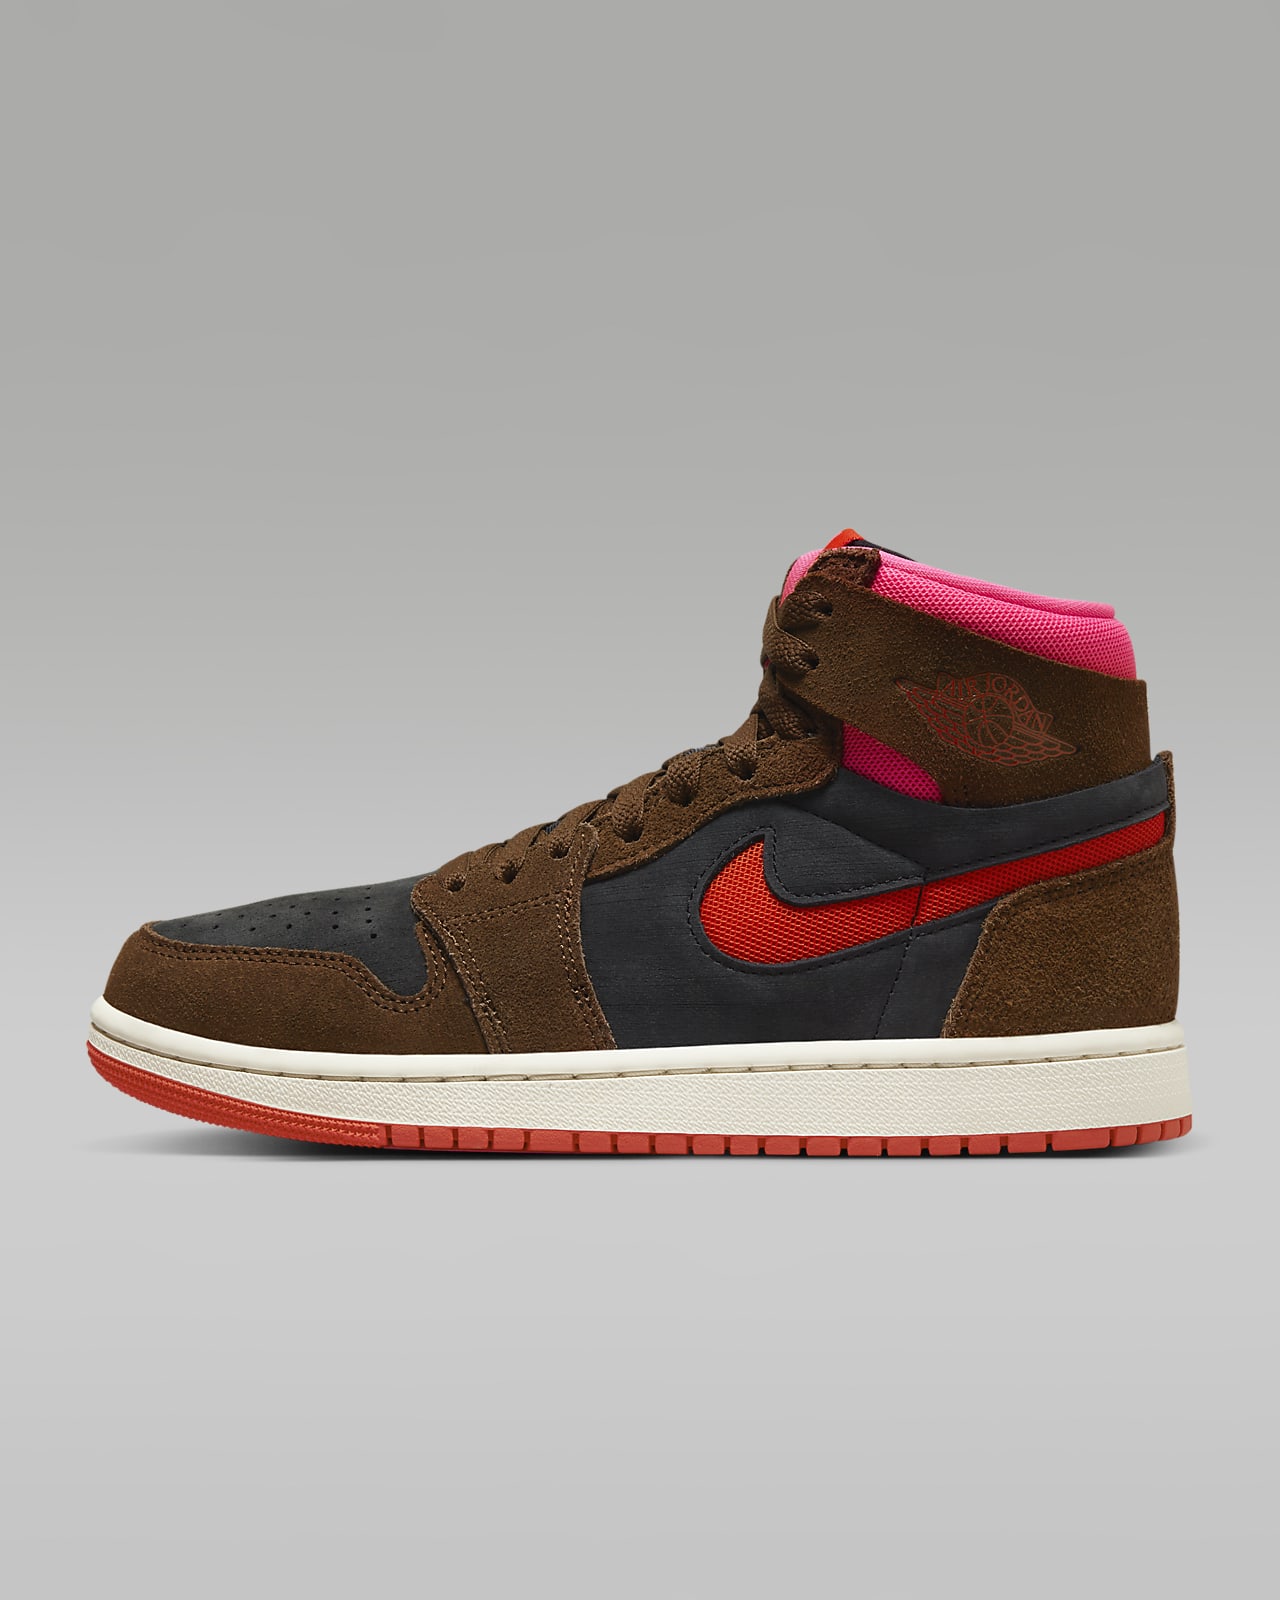 Air Jordan 1 Zoom CMFT 2 Women's Shoes, by Nike Size 8 (Brown)